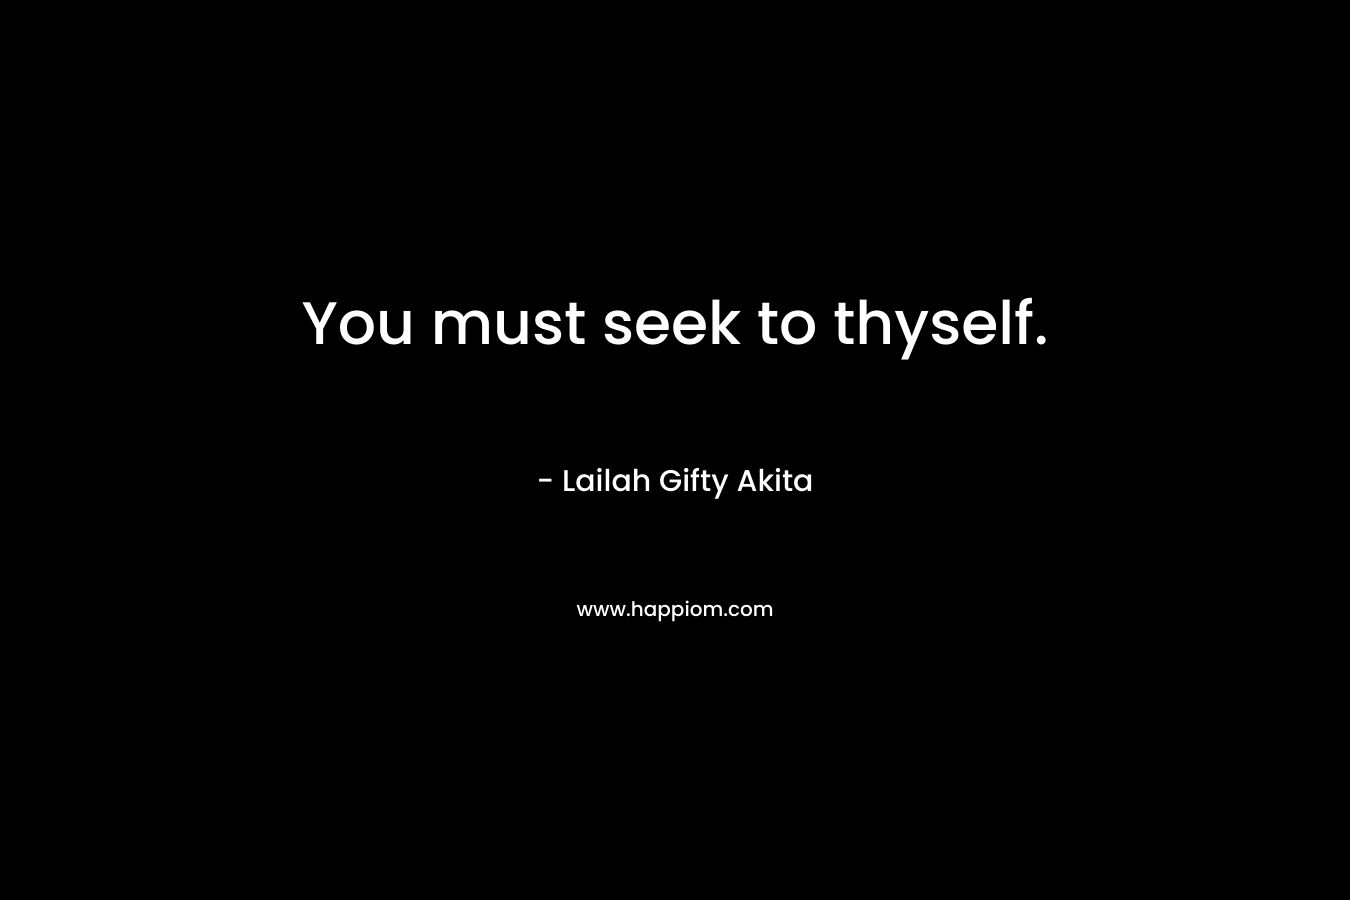 You must seek to thyself.